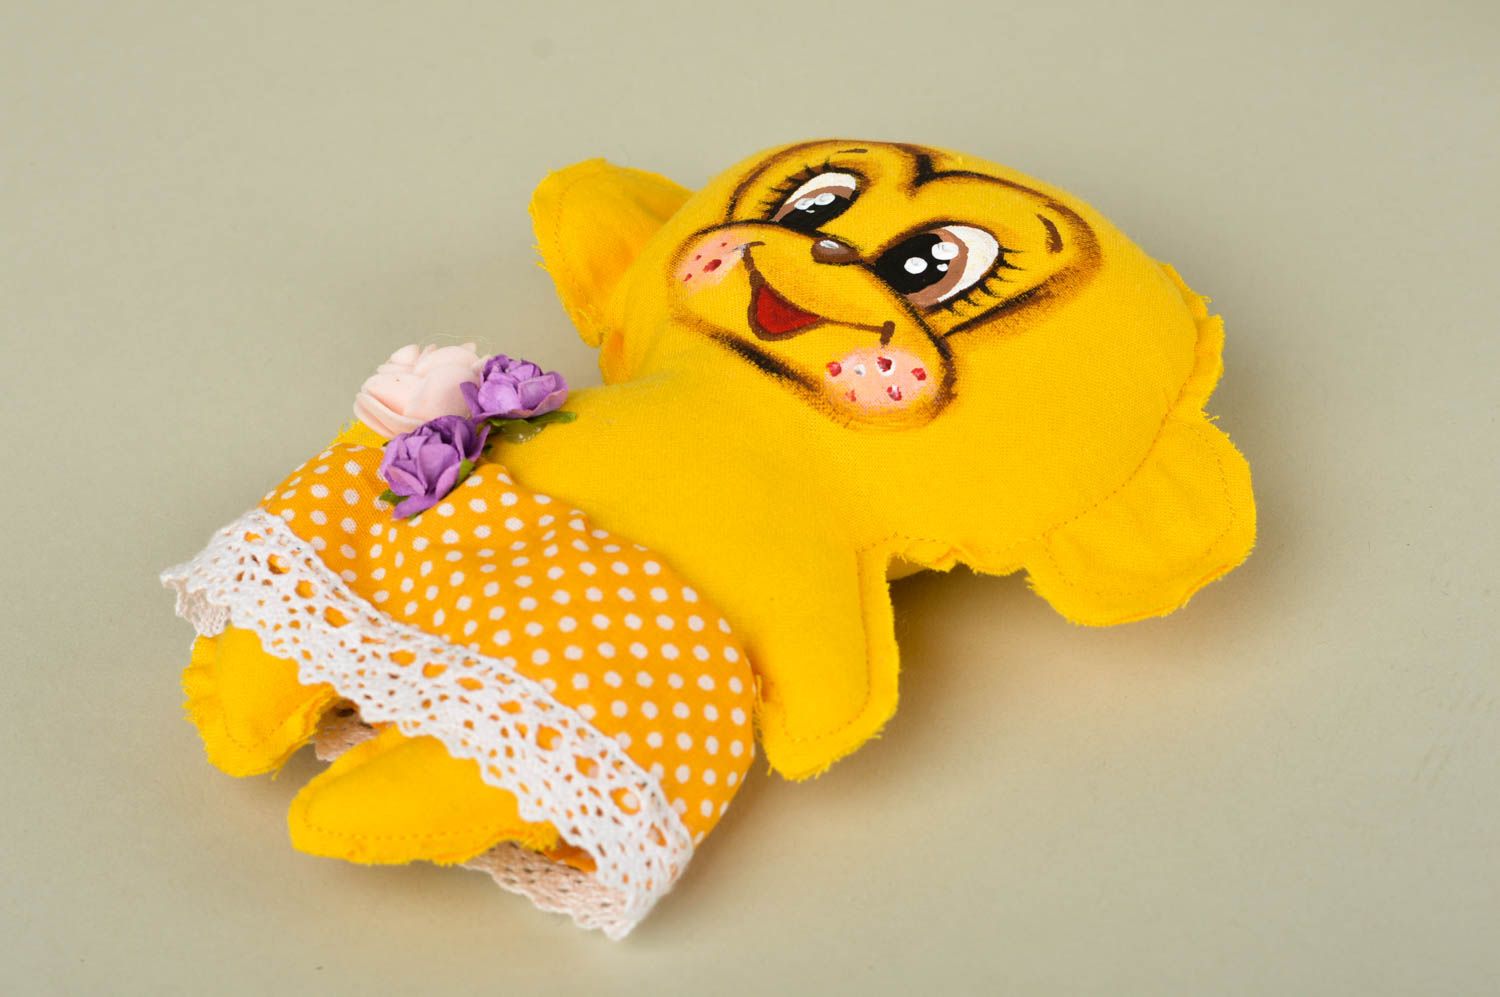 Handmade yellow decorative toy bright soft toy nursery decoration ideas photo 4